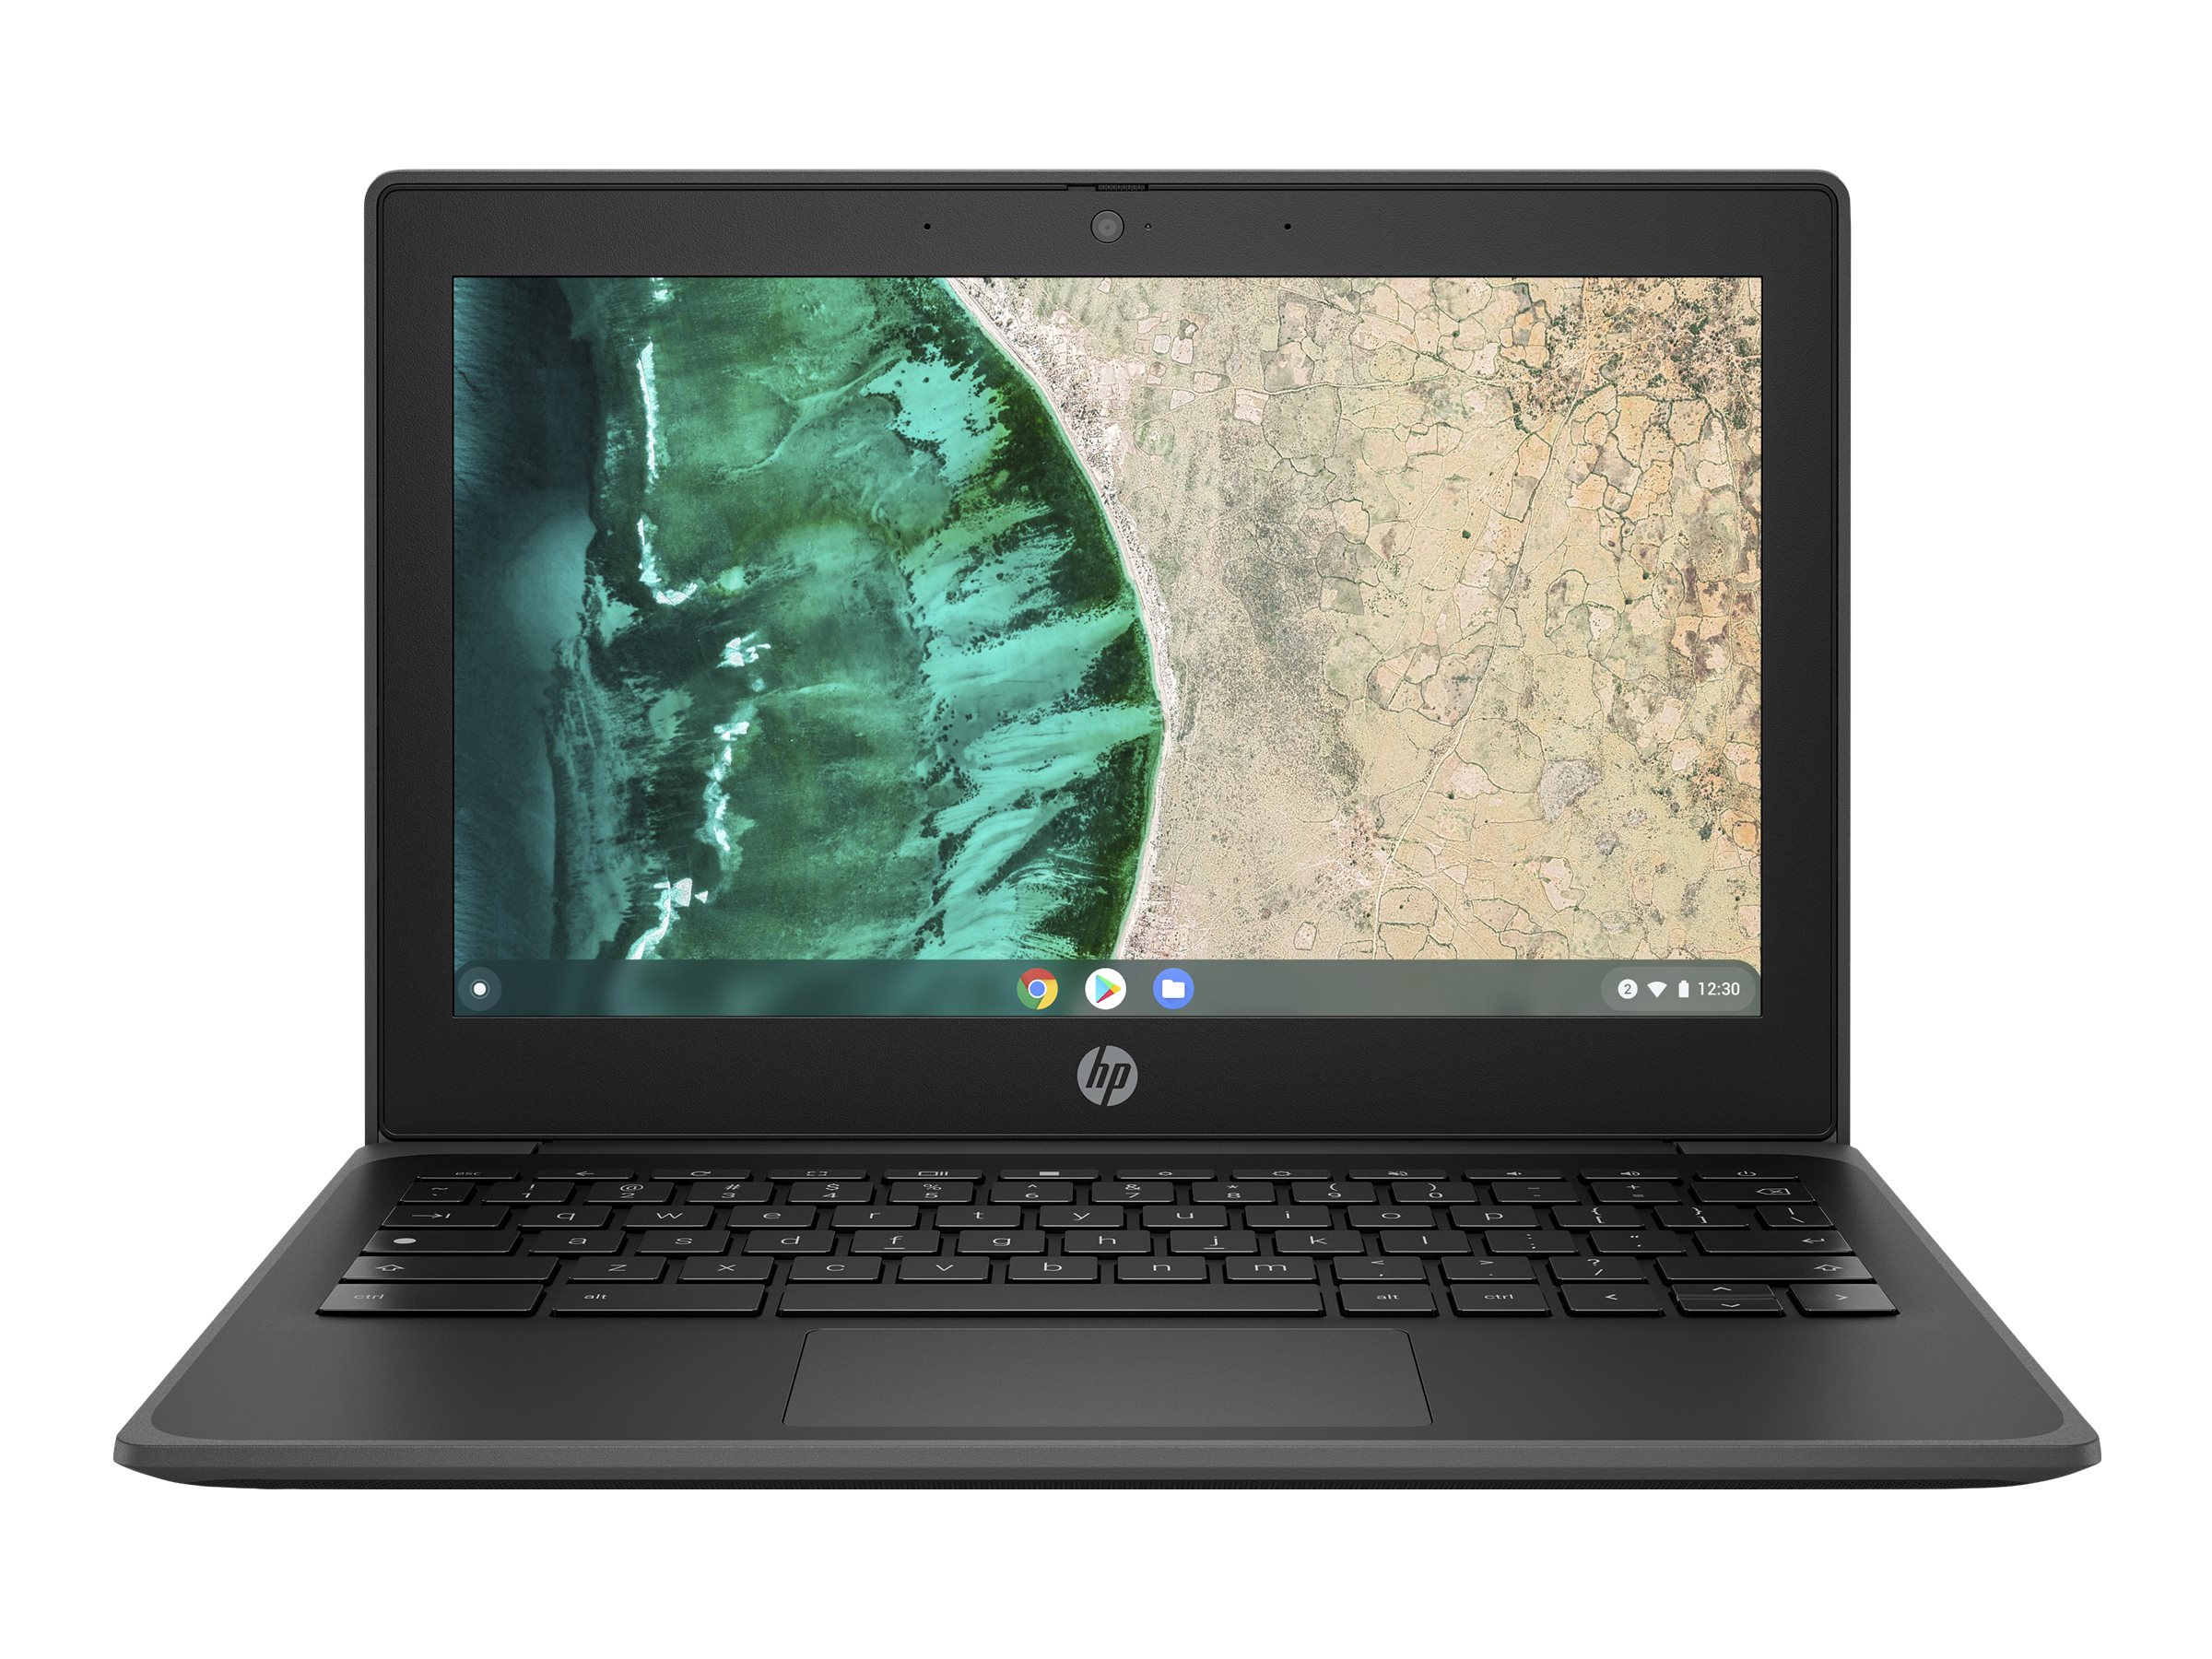 A black HP brand Chromebook laptop